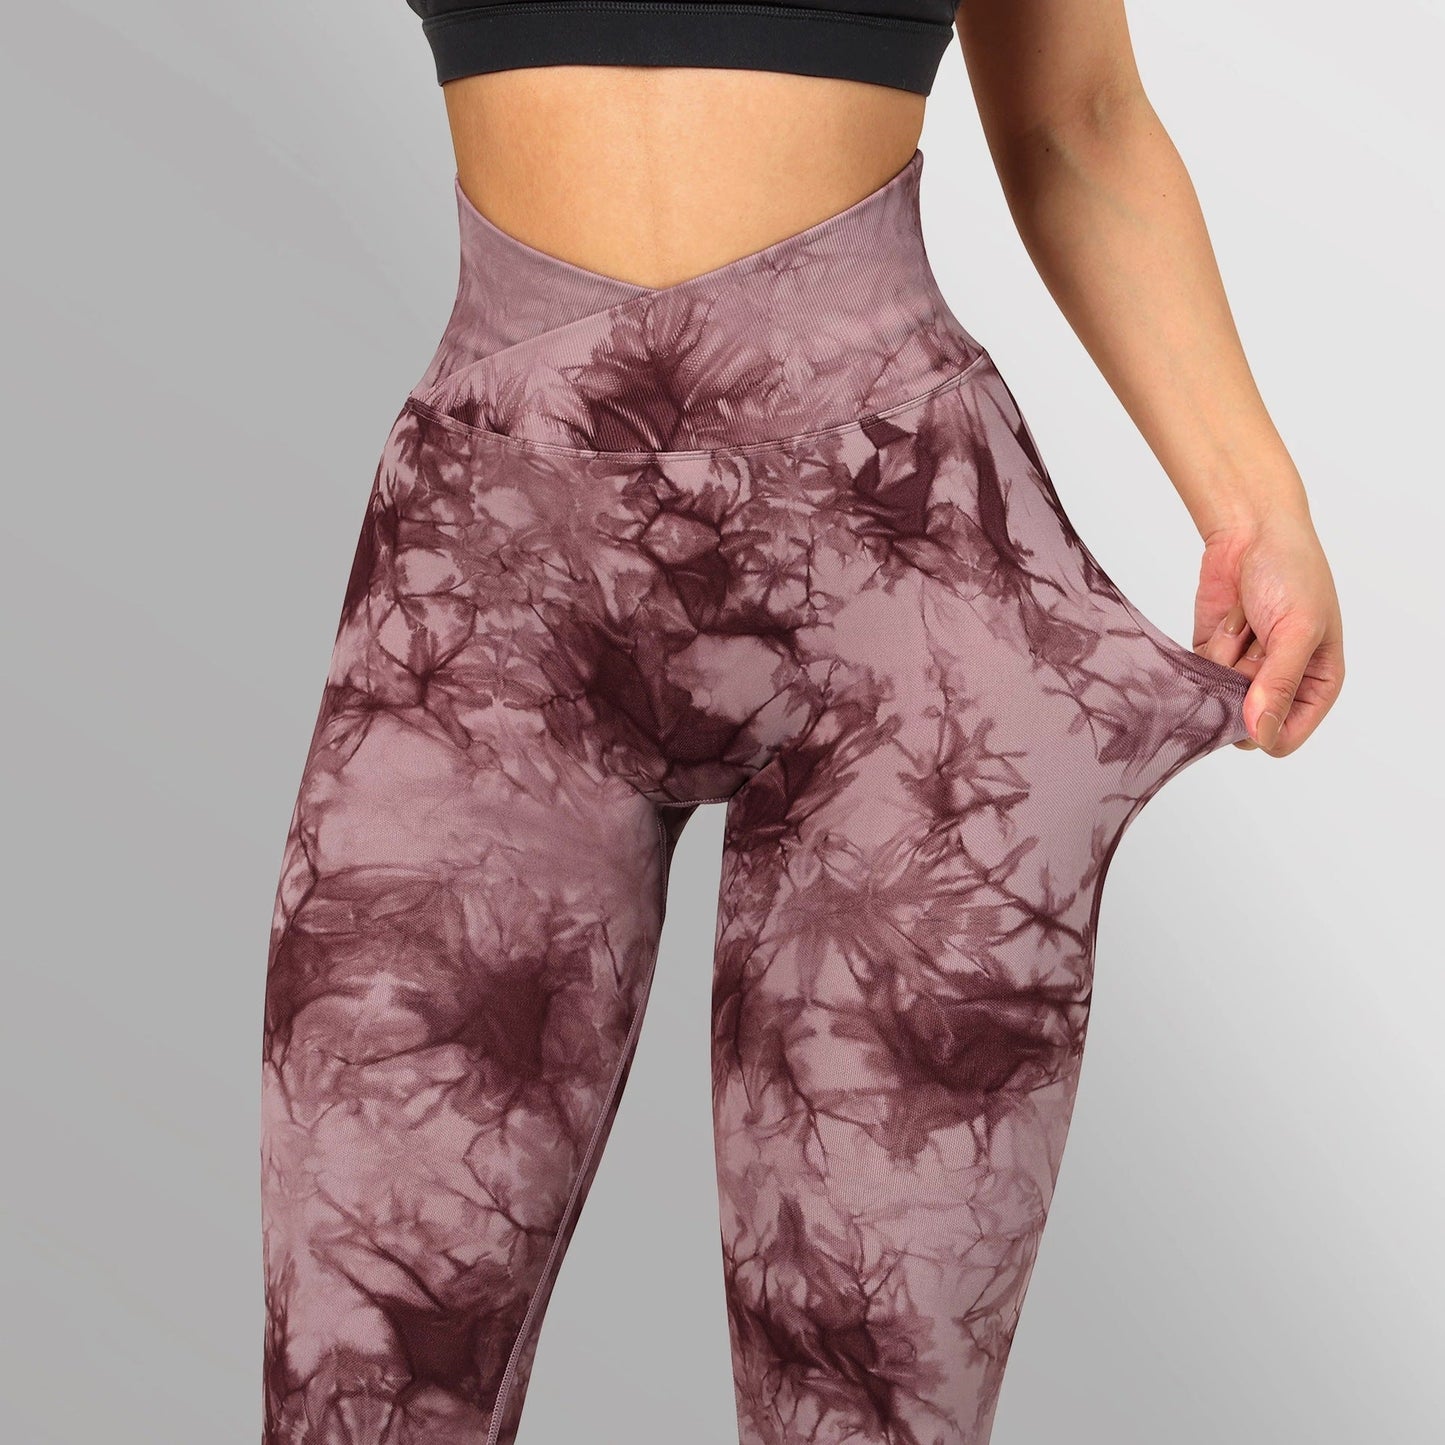 Seamless Tie Dye Leggings Women's Yoga Pants | Burgundy | GlamzLife